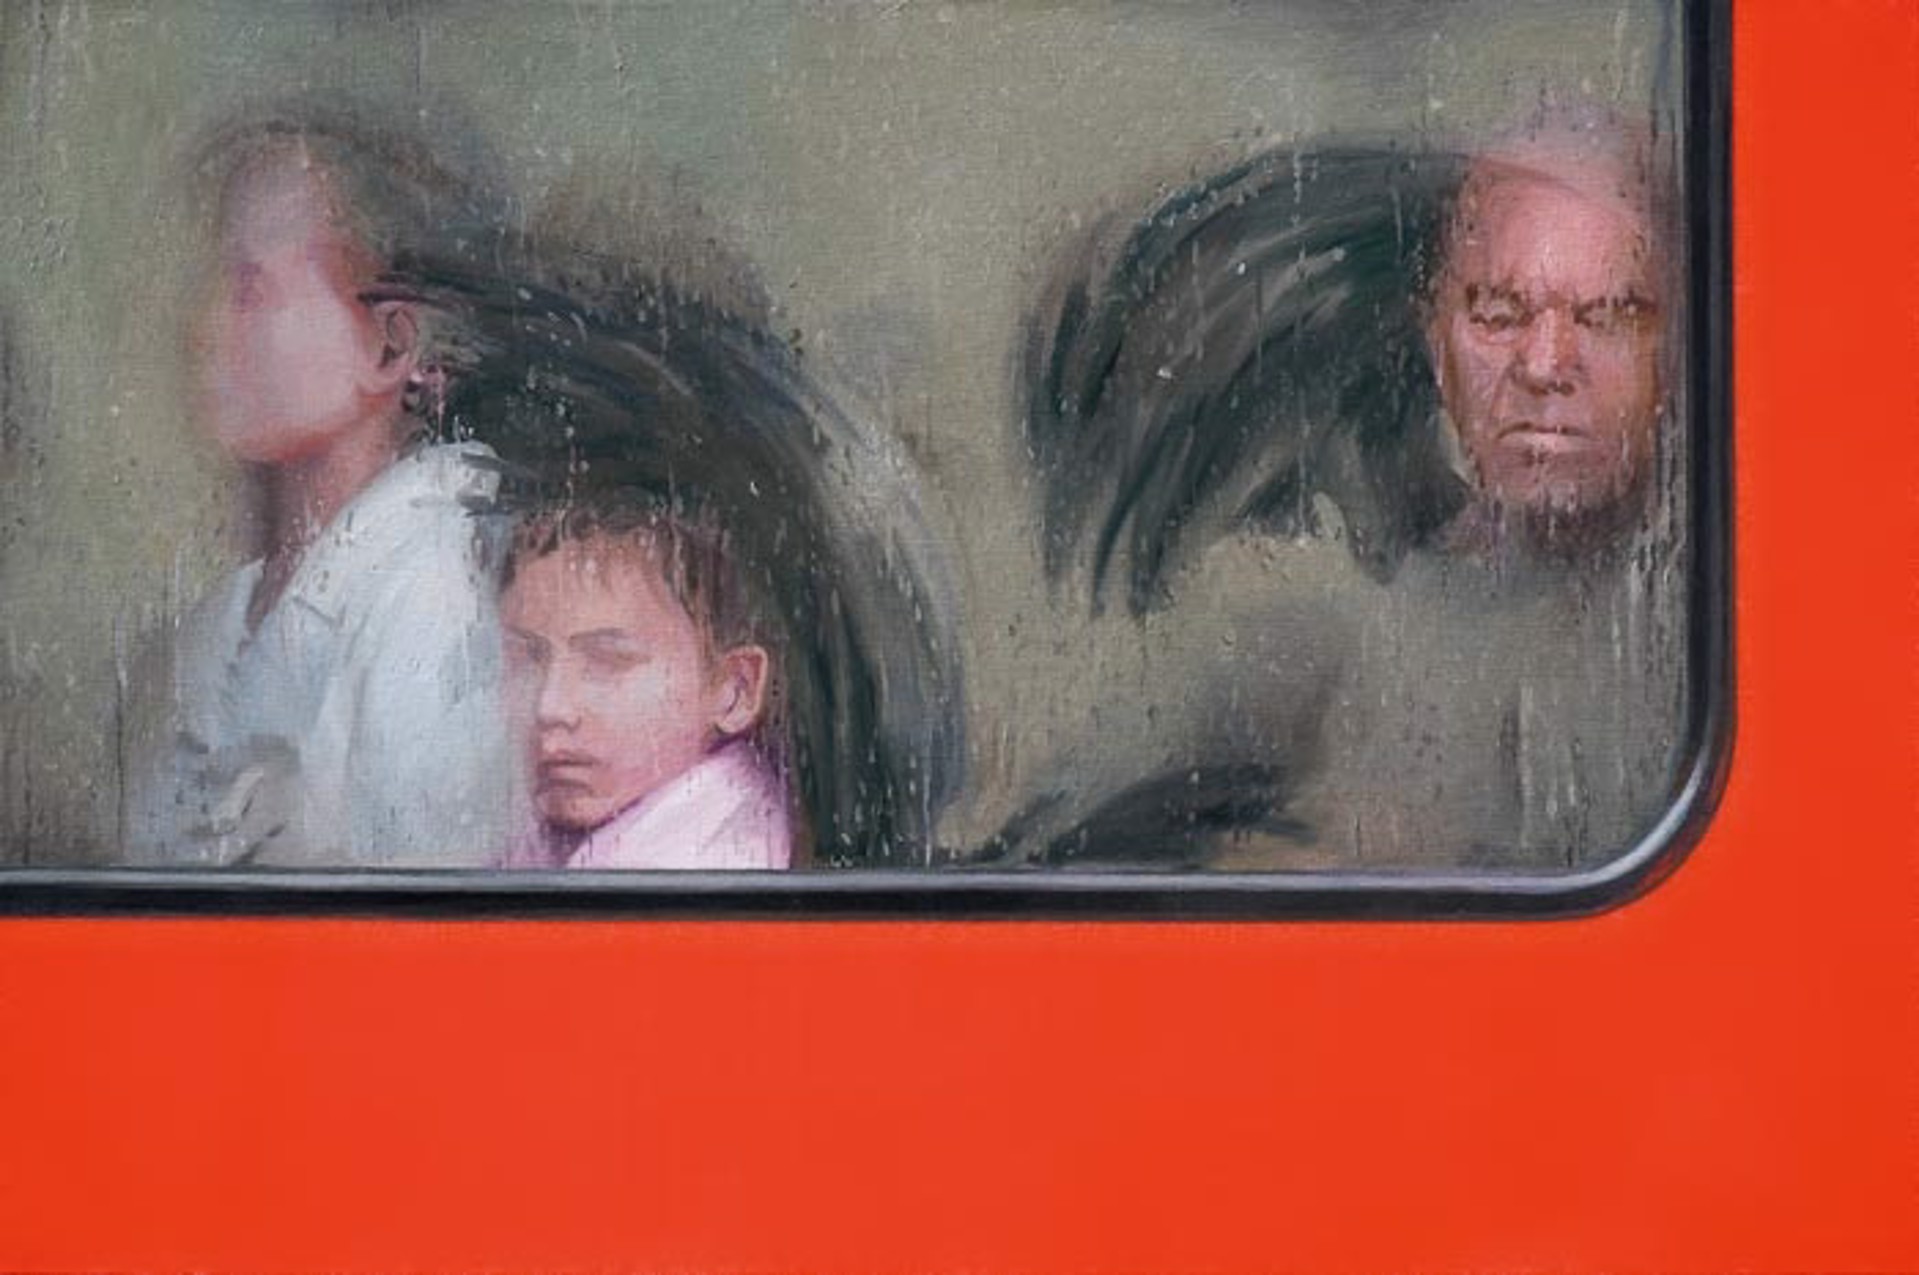 Rain (Bus) by Maxim Wakultschik